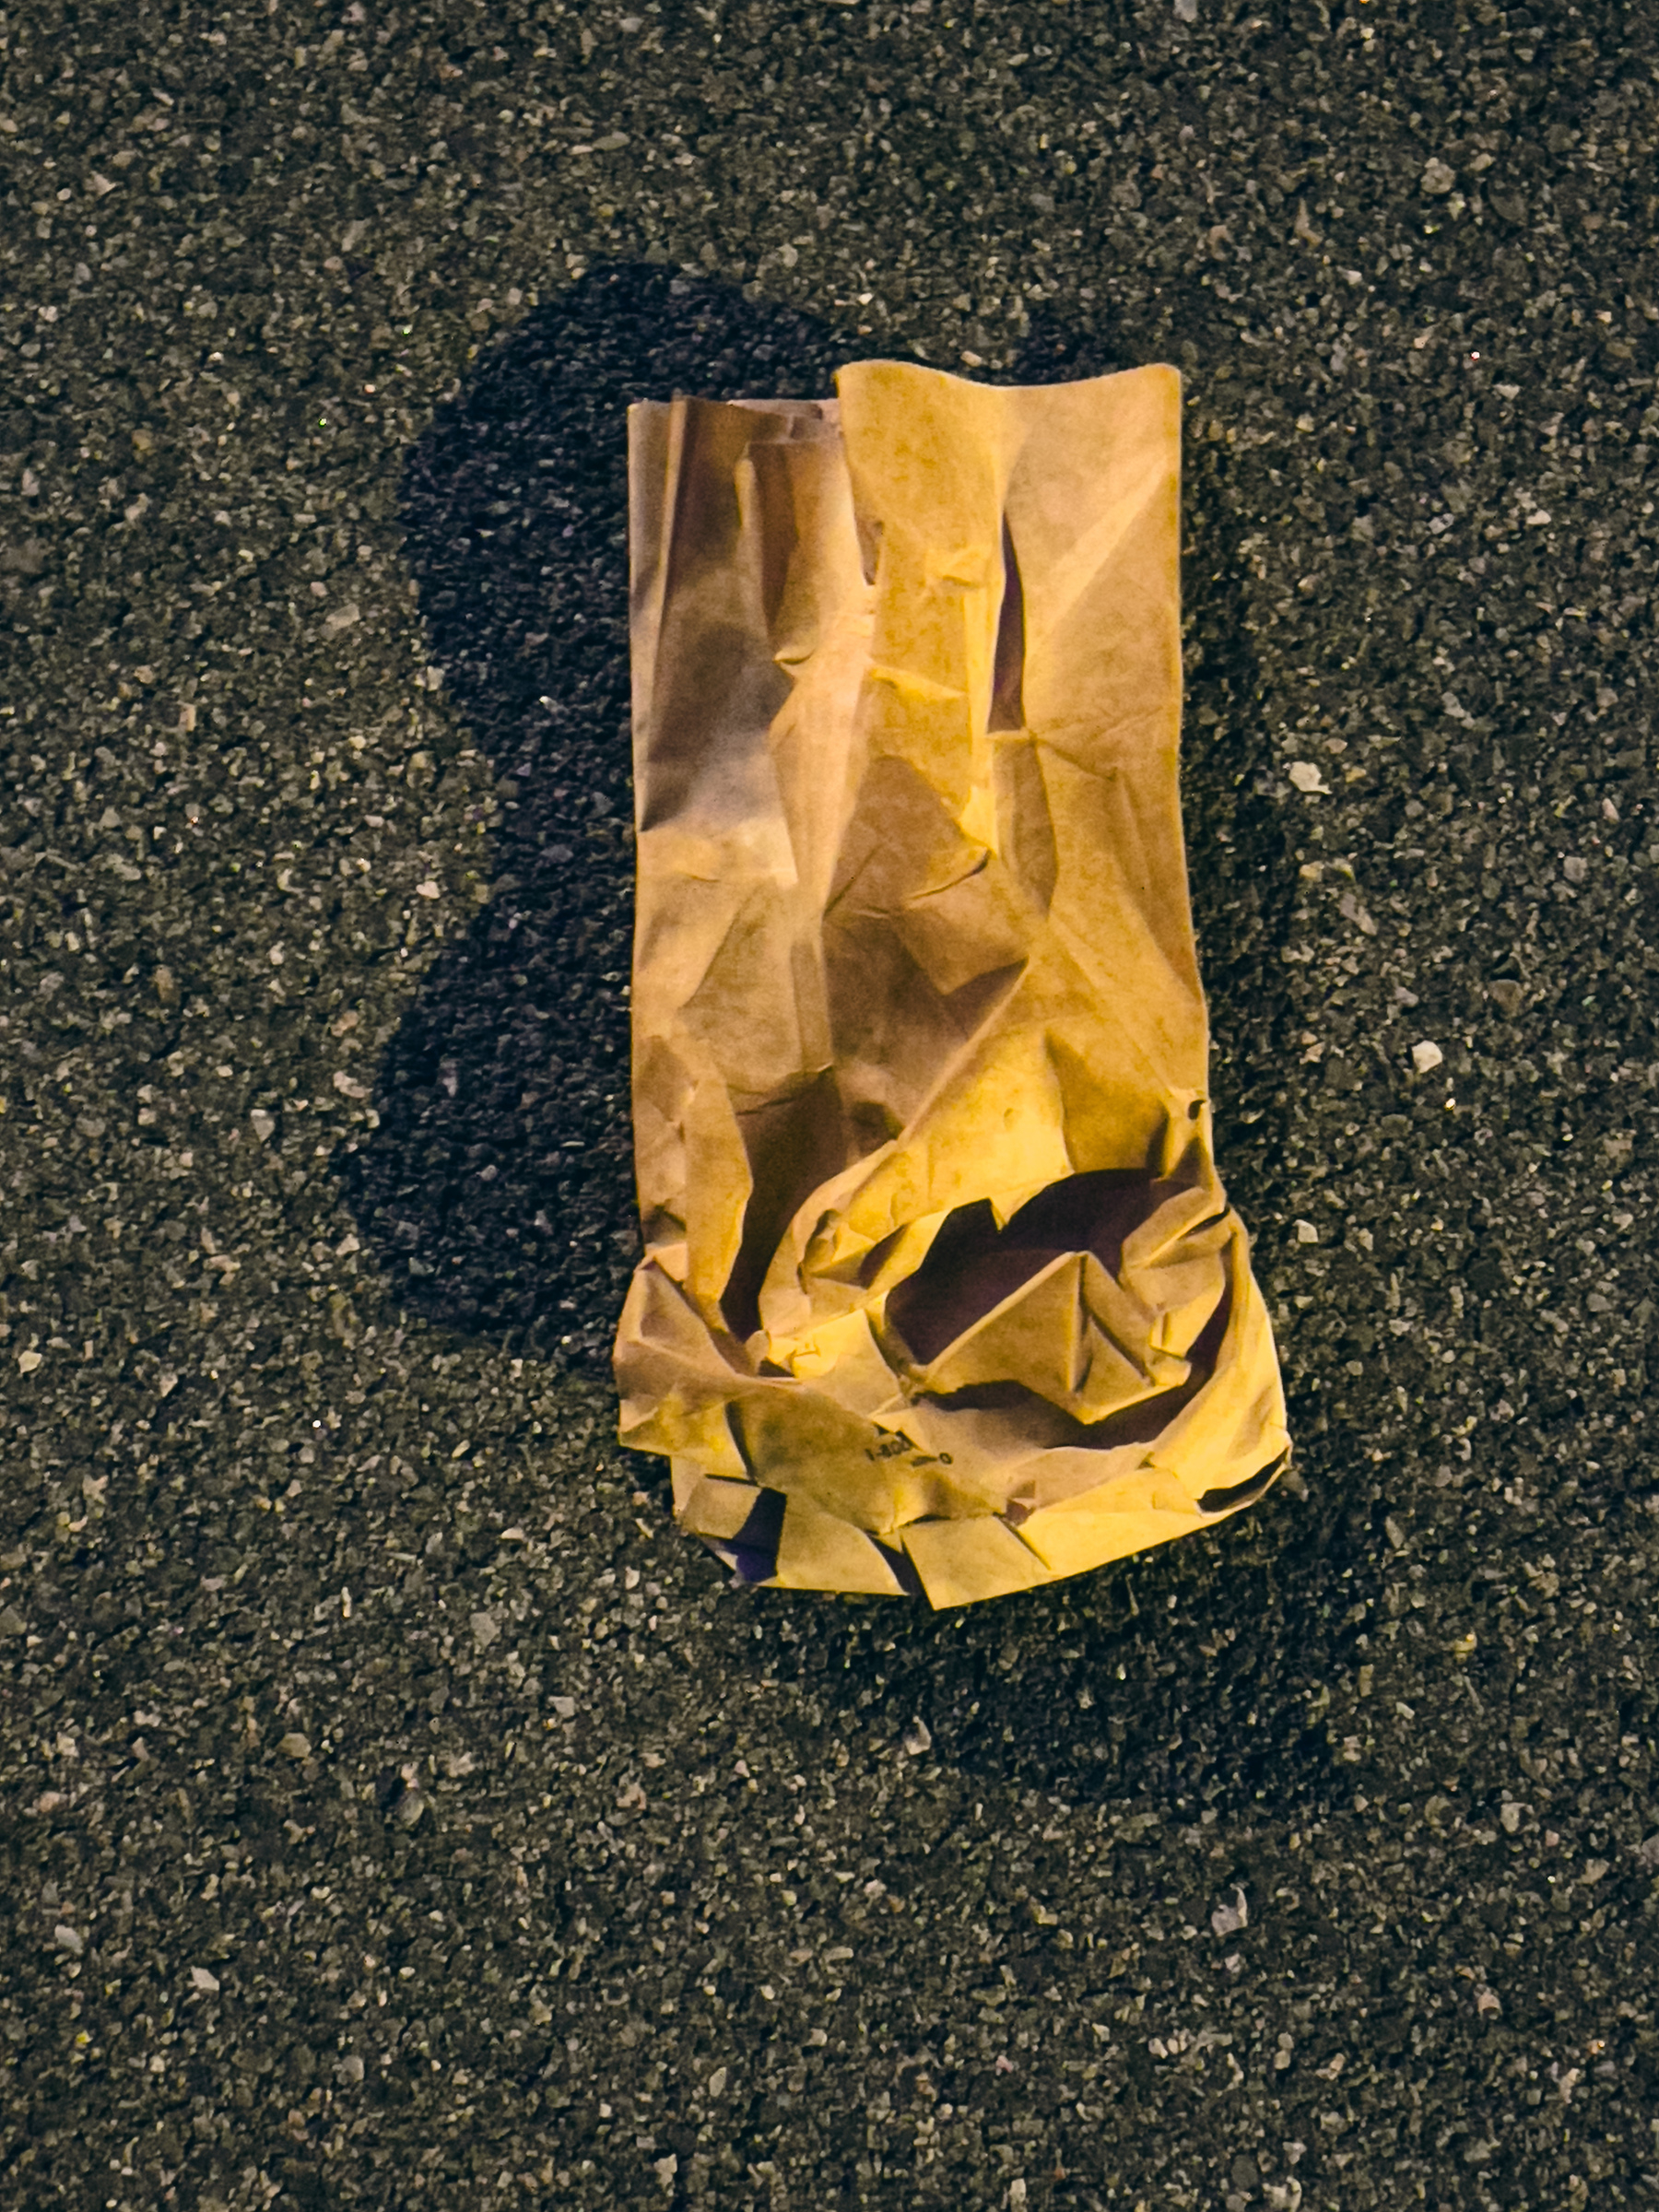 Crumpled brown paper bag on asphalt pavement illuminated by streetlights.